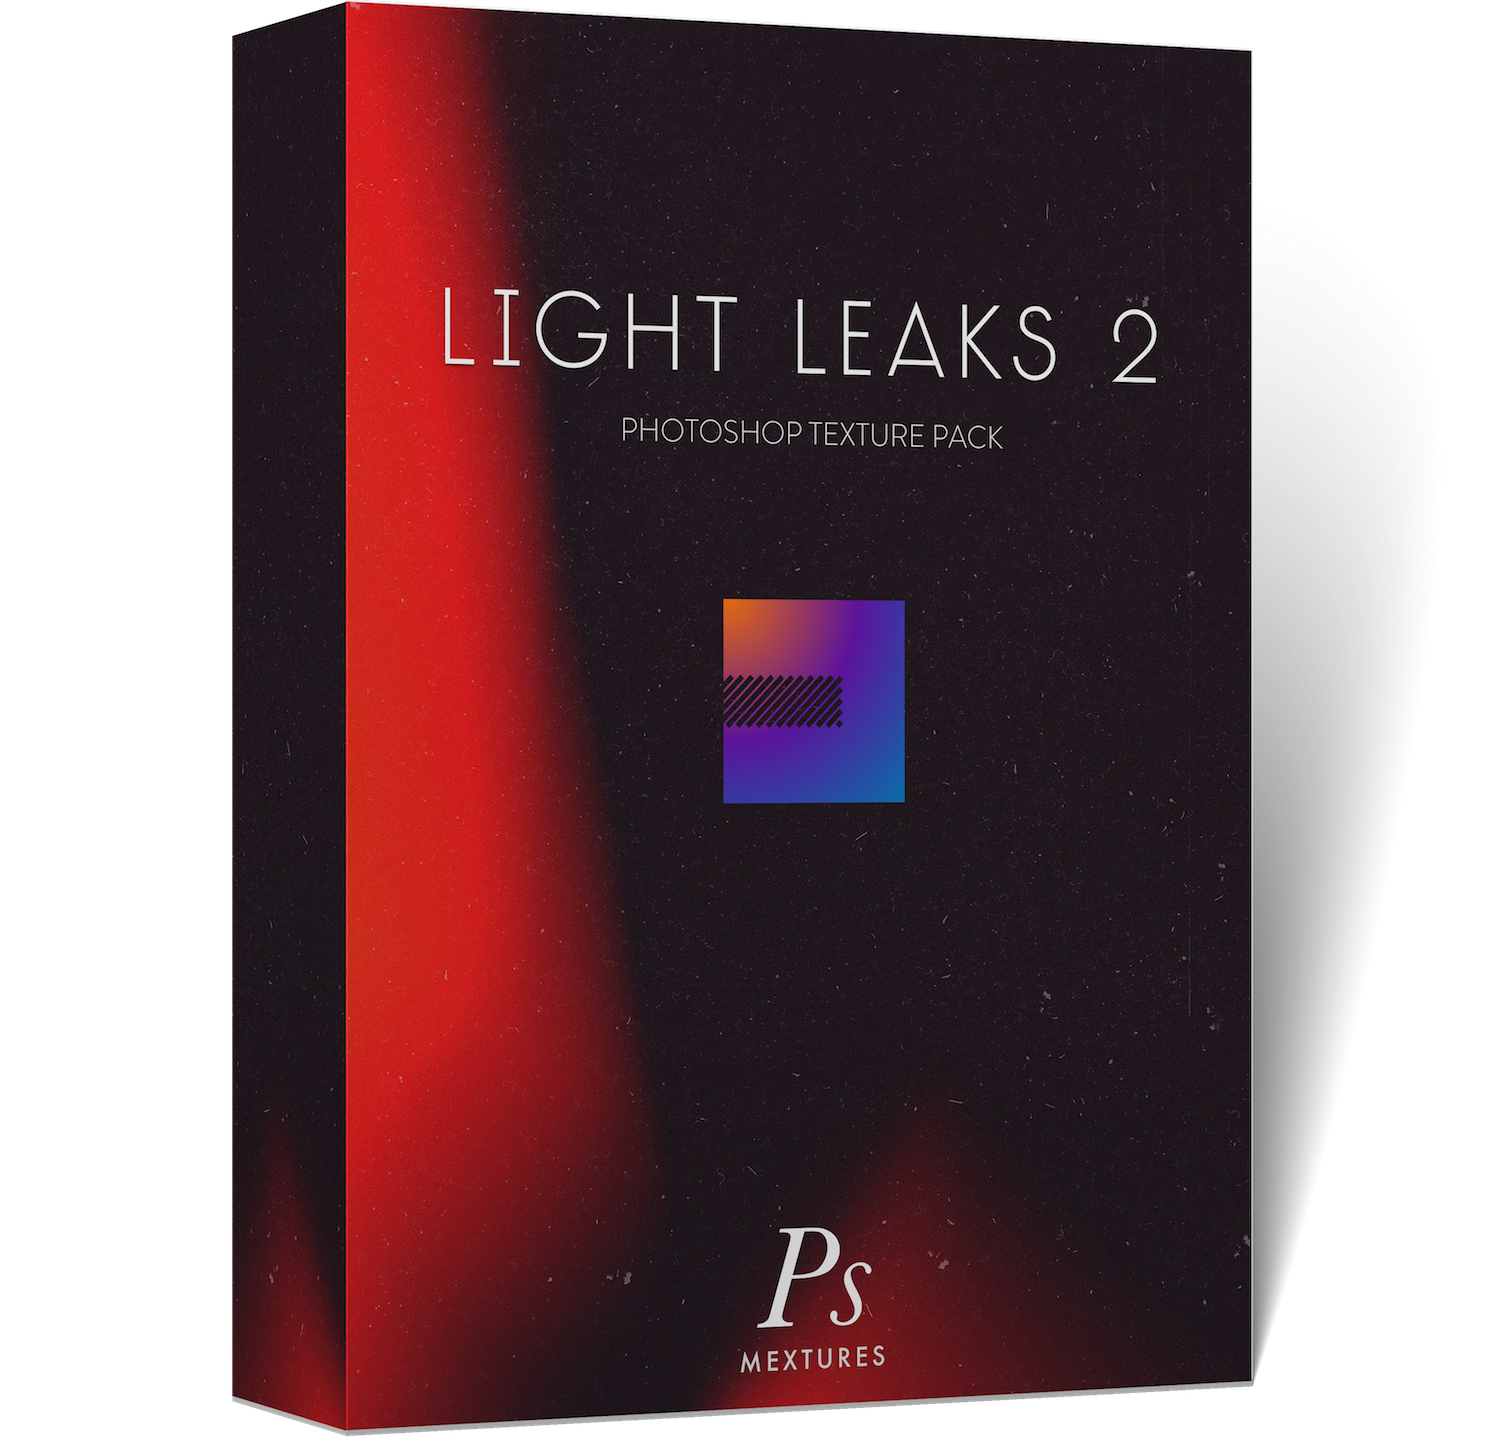 MEXTURES FOR PHOTOSHOP – Light Leaks 2[Merekdavis]